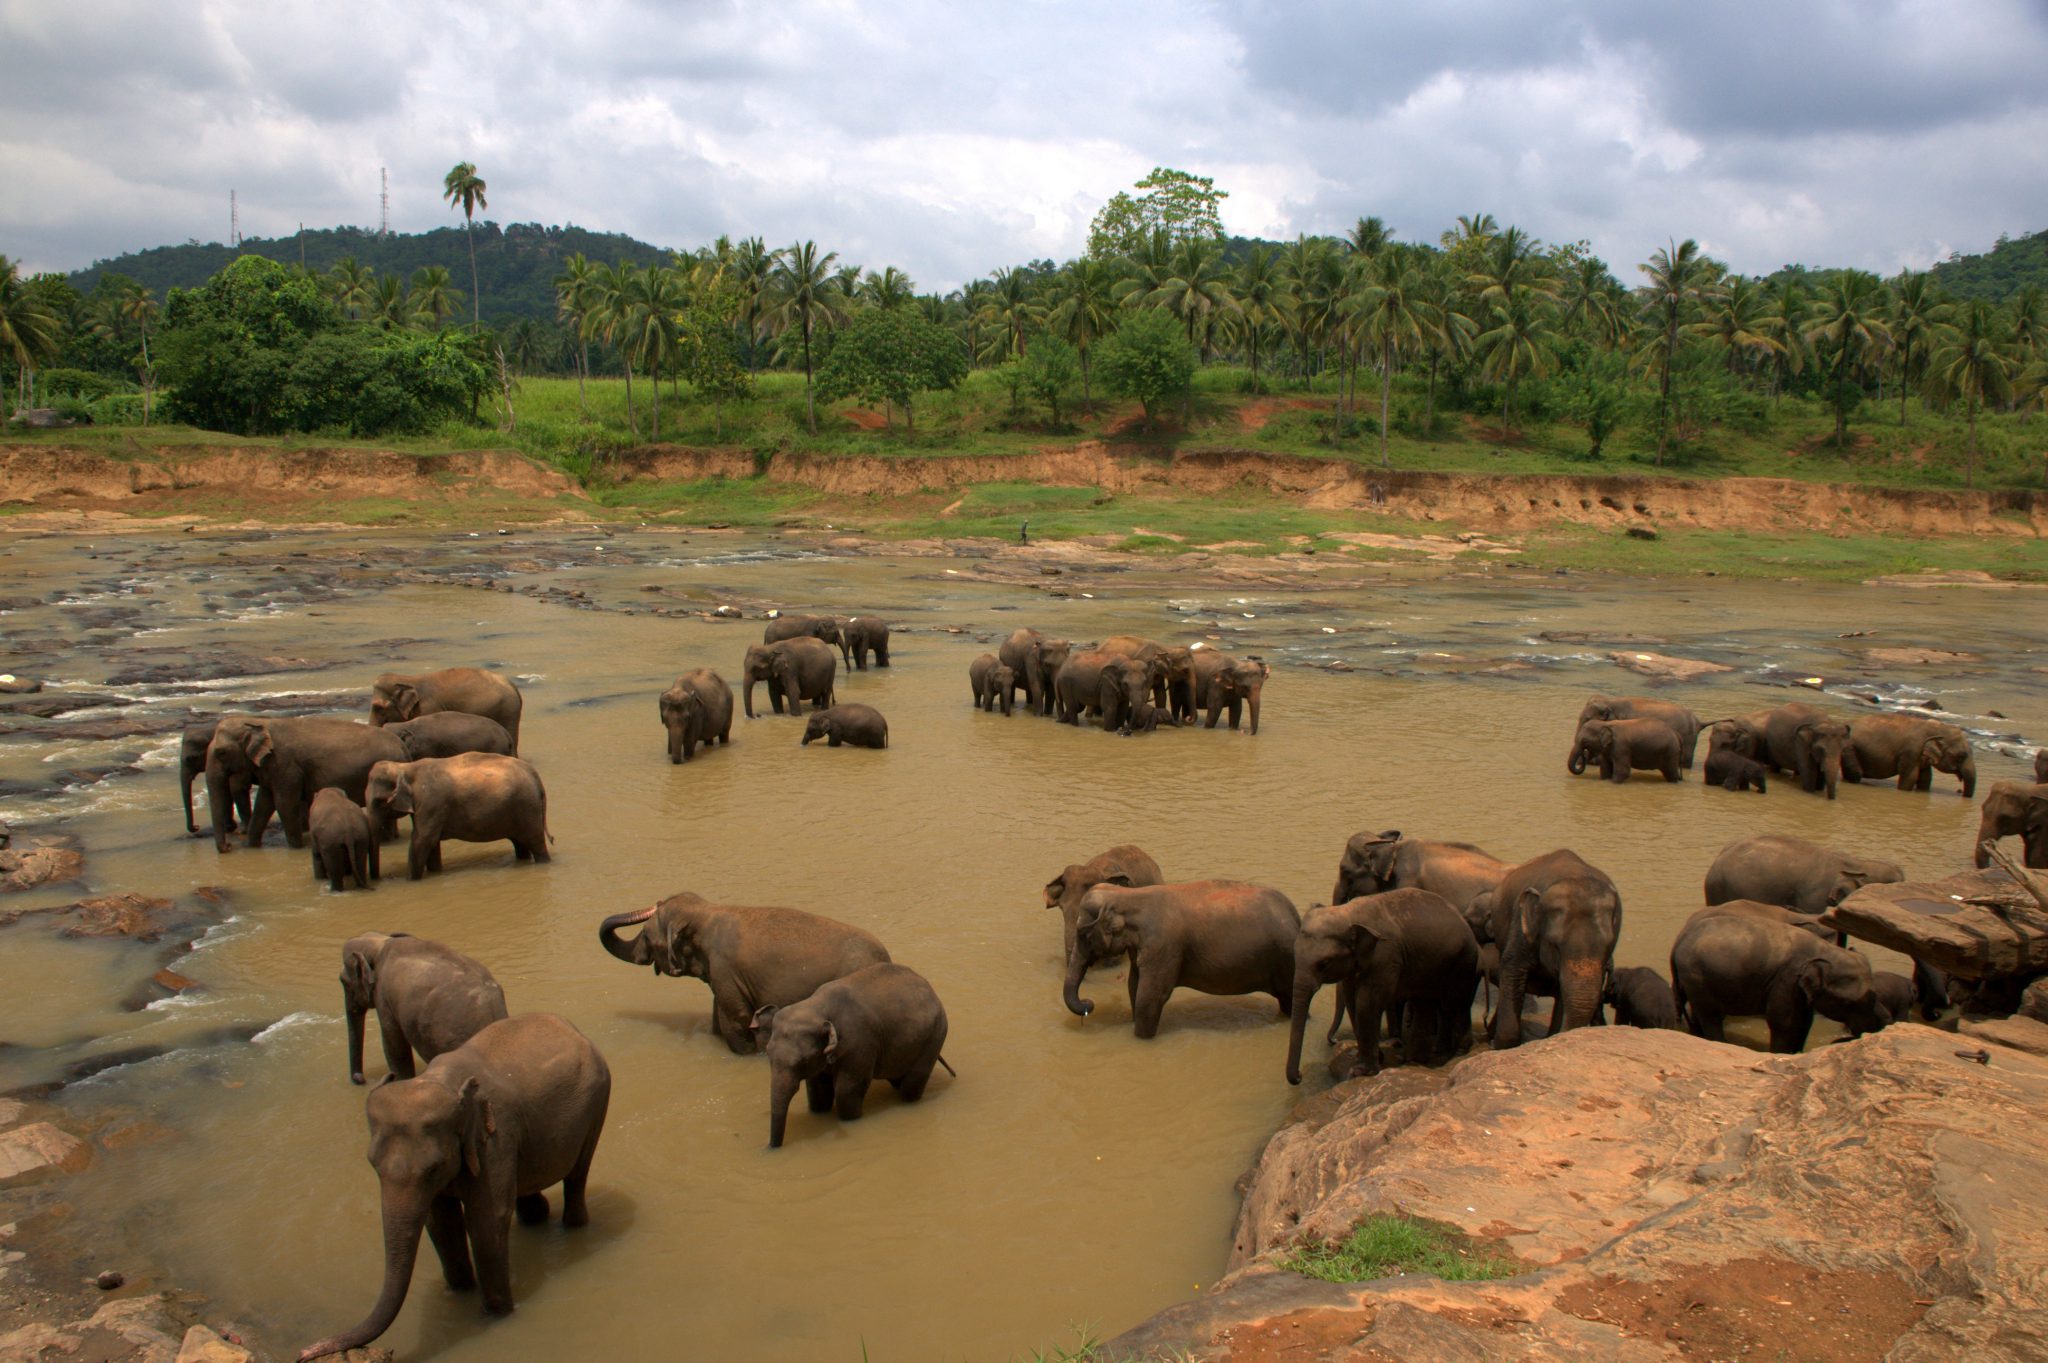 http://www.dreamstime.com/royalty-free-stock-photos-pinnawela-elephant-orphanage-sri-lanka-image21013668